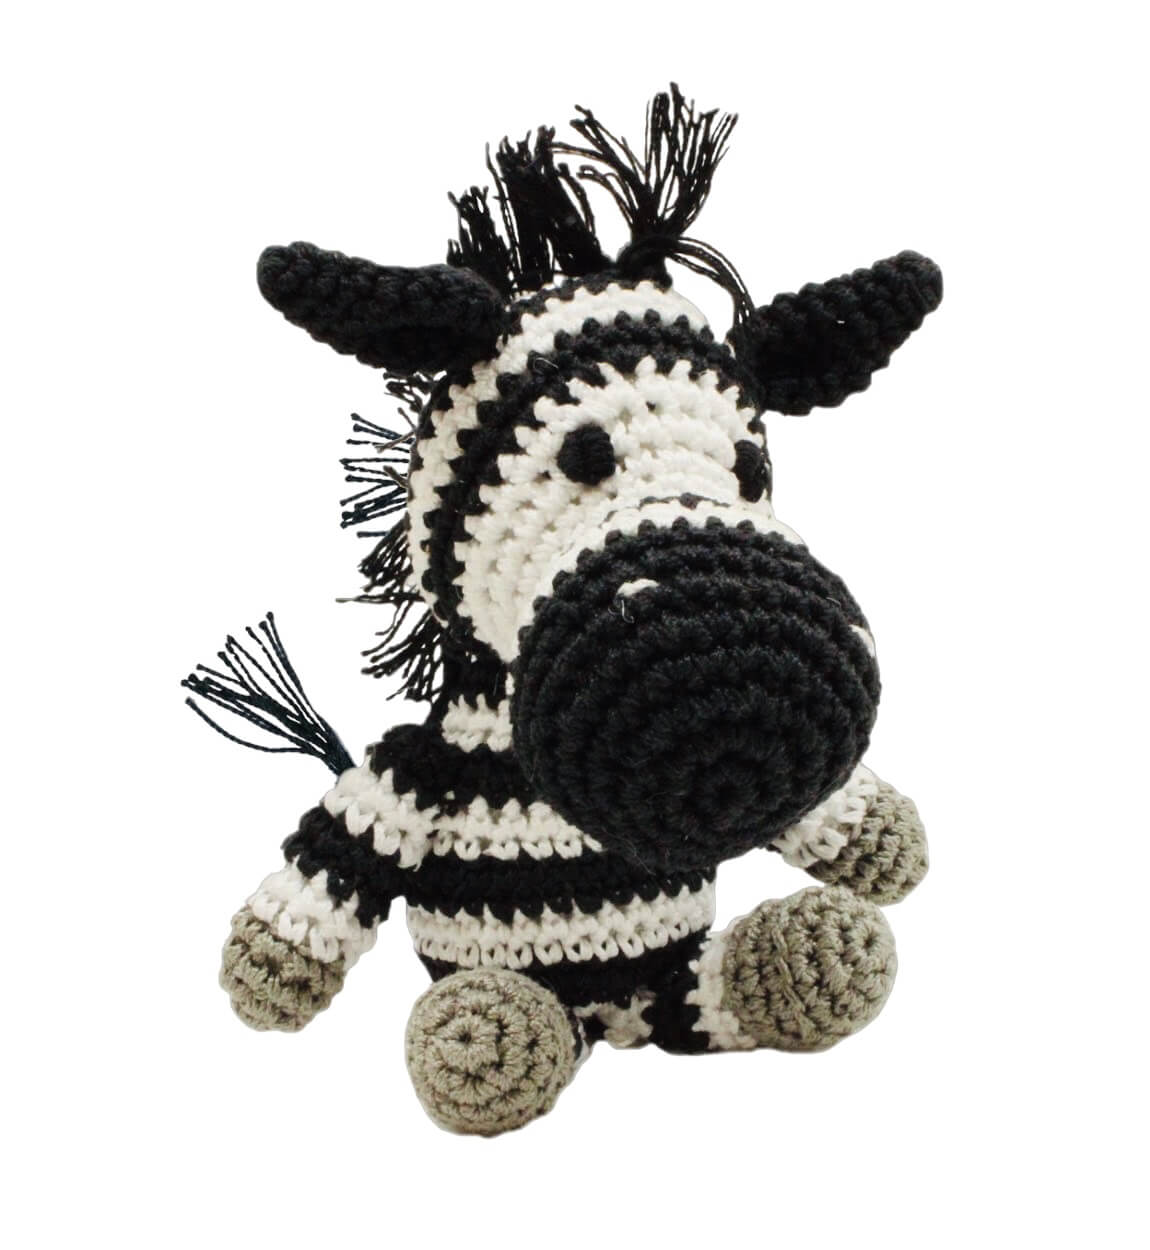 Knit Knacks "Zsa Zsa the Zebra" handmade organic cotton dog toy. Black and white zebra with a fringed mane and tail.